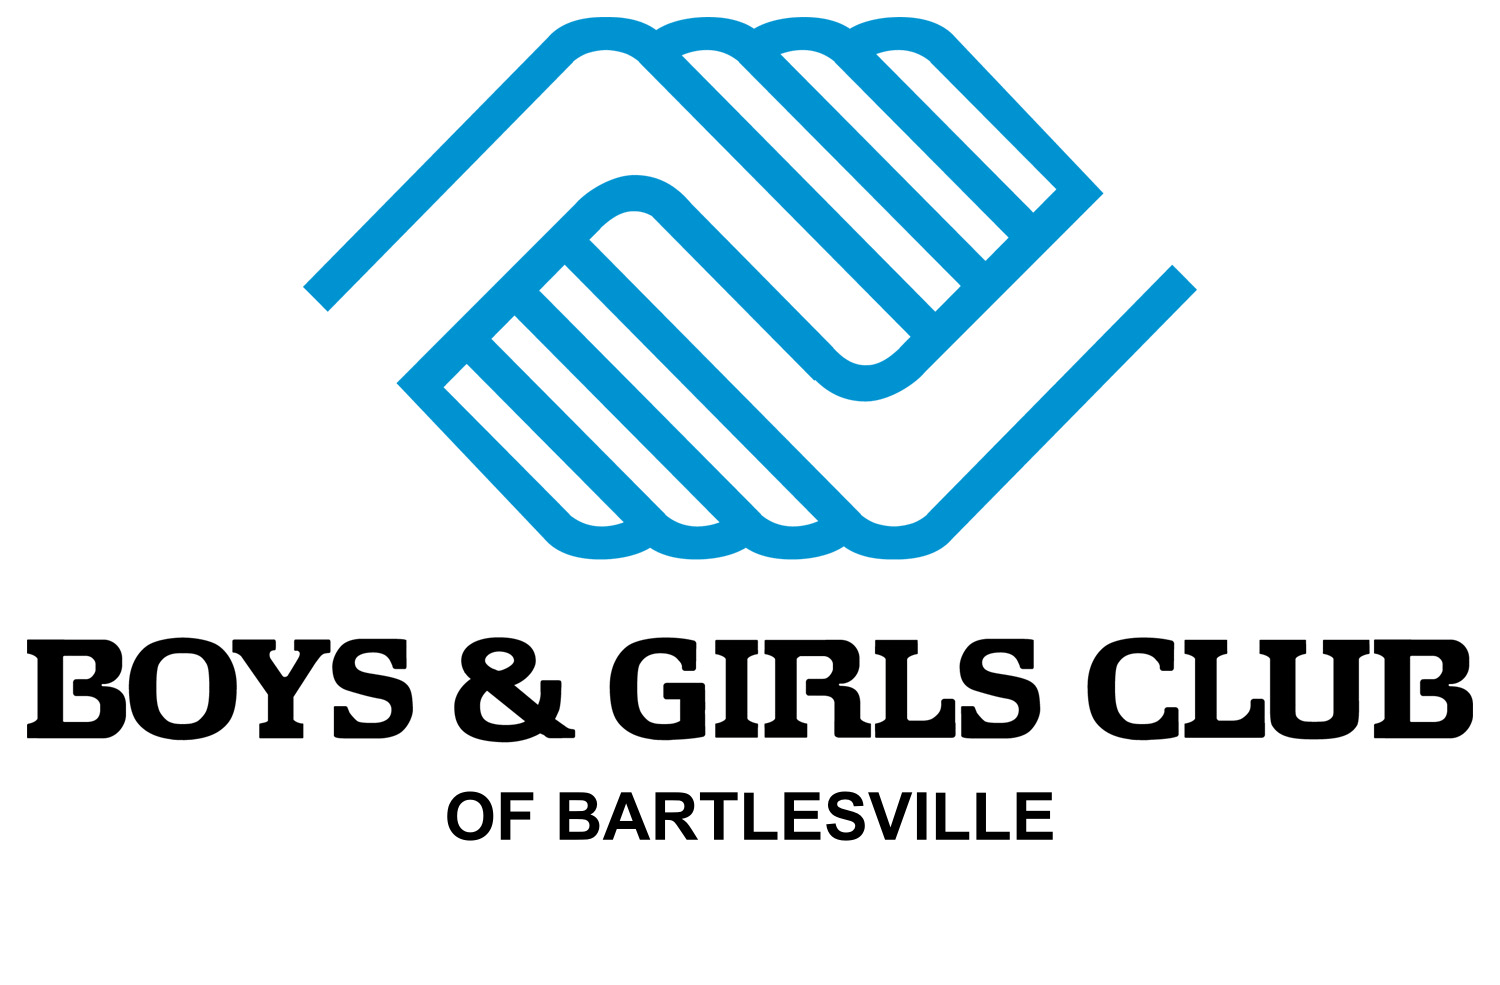 Bartlesville Logo - BGC Bville logo & Girls Club of Bartlesville